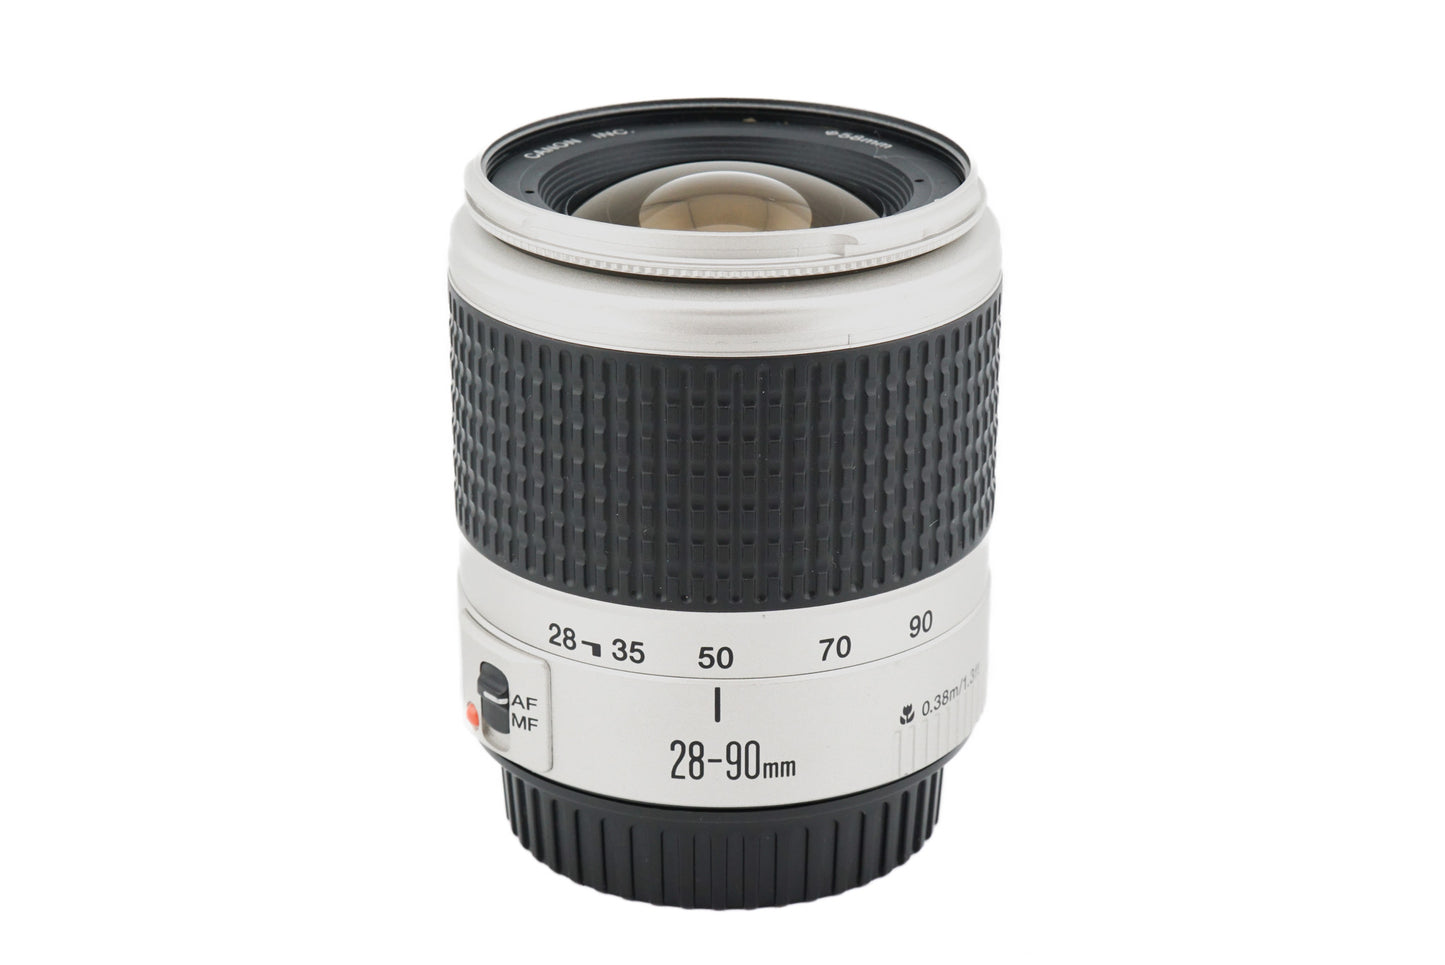 Canon 28-90mm f4-5.6 - Lens